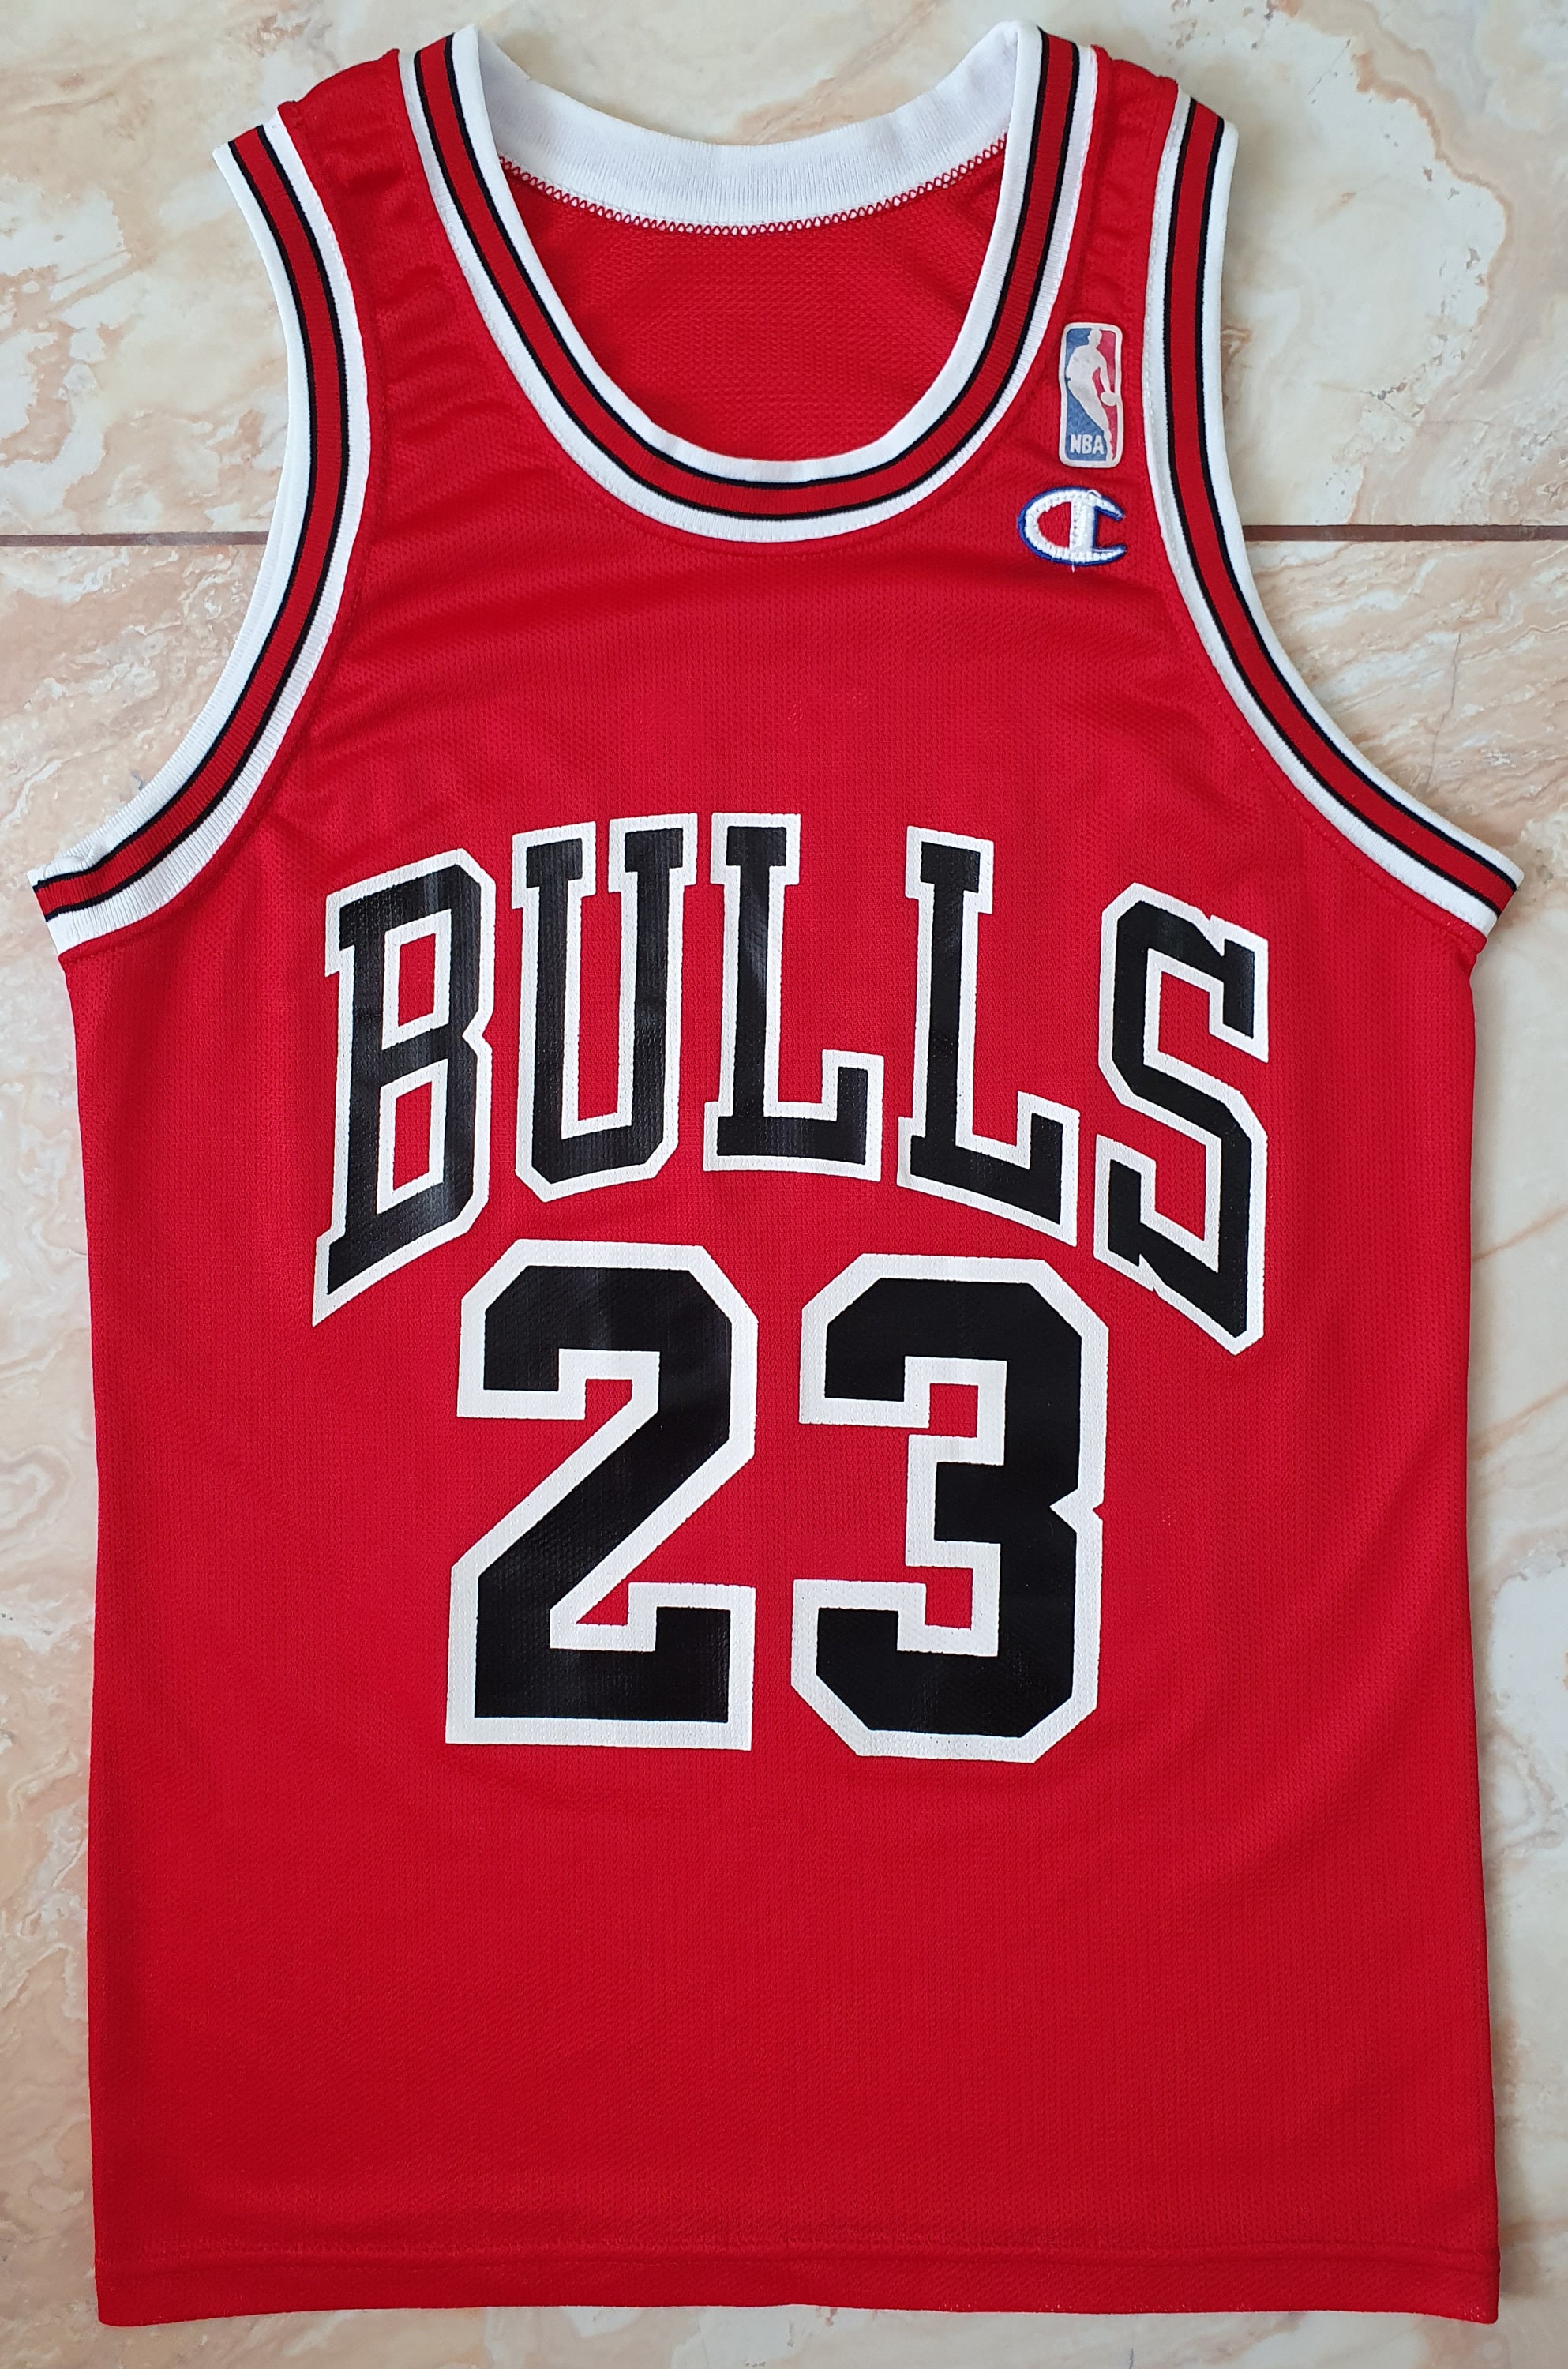 Buy Dennis Rodman Champion Jersey Chicago Bulls NBA Basketball Online in  India 